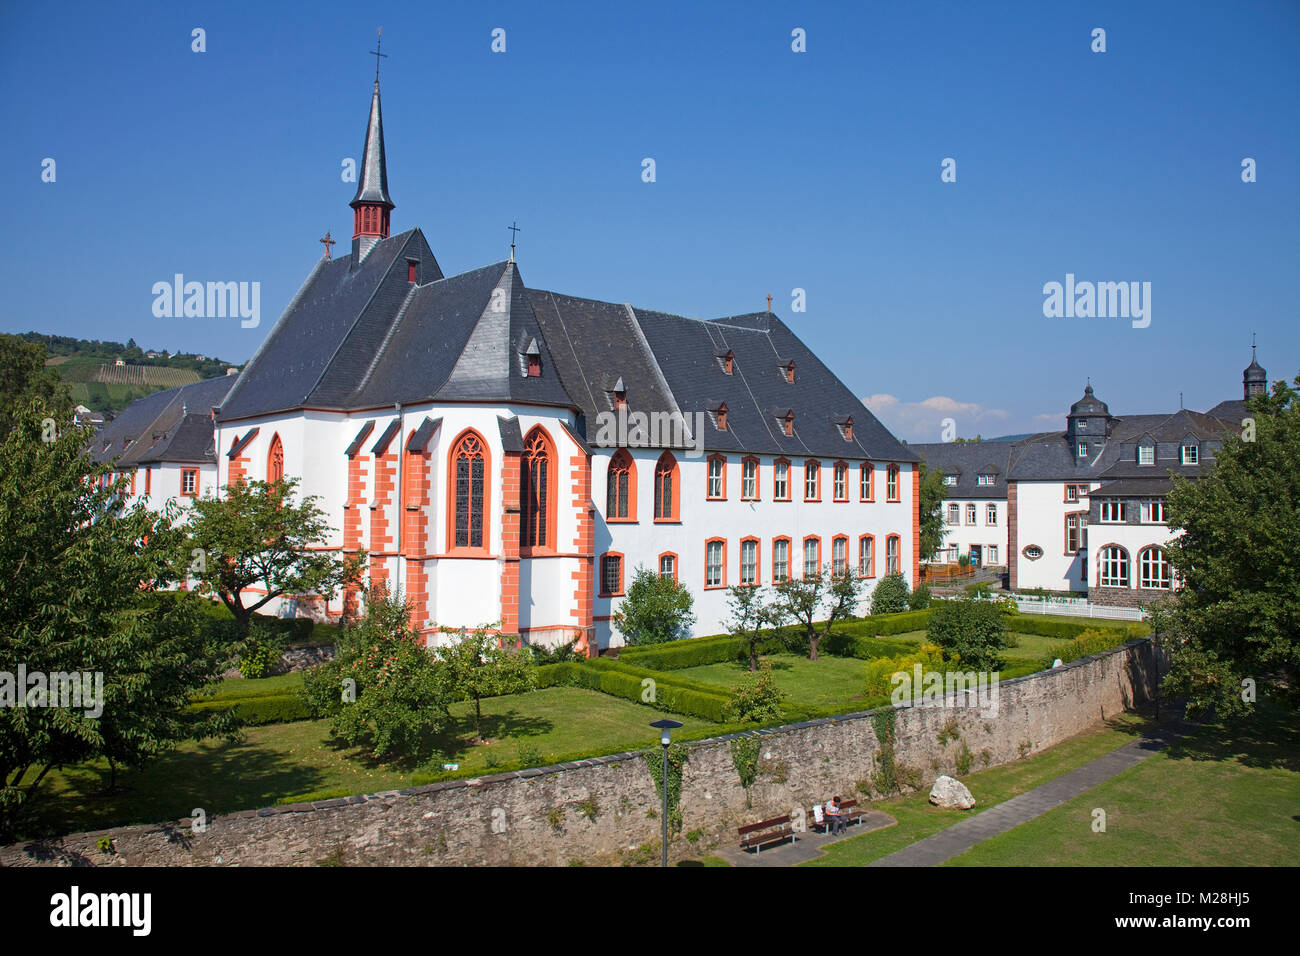 Cusanusstift, Saint Nikolaus-Hospital, care home, old people's home, Bernkastel-Kues, Moselle river, Rhineland-Palatinate, Germany, Europe Stock Photo